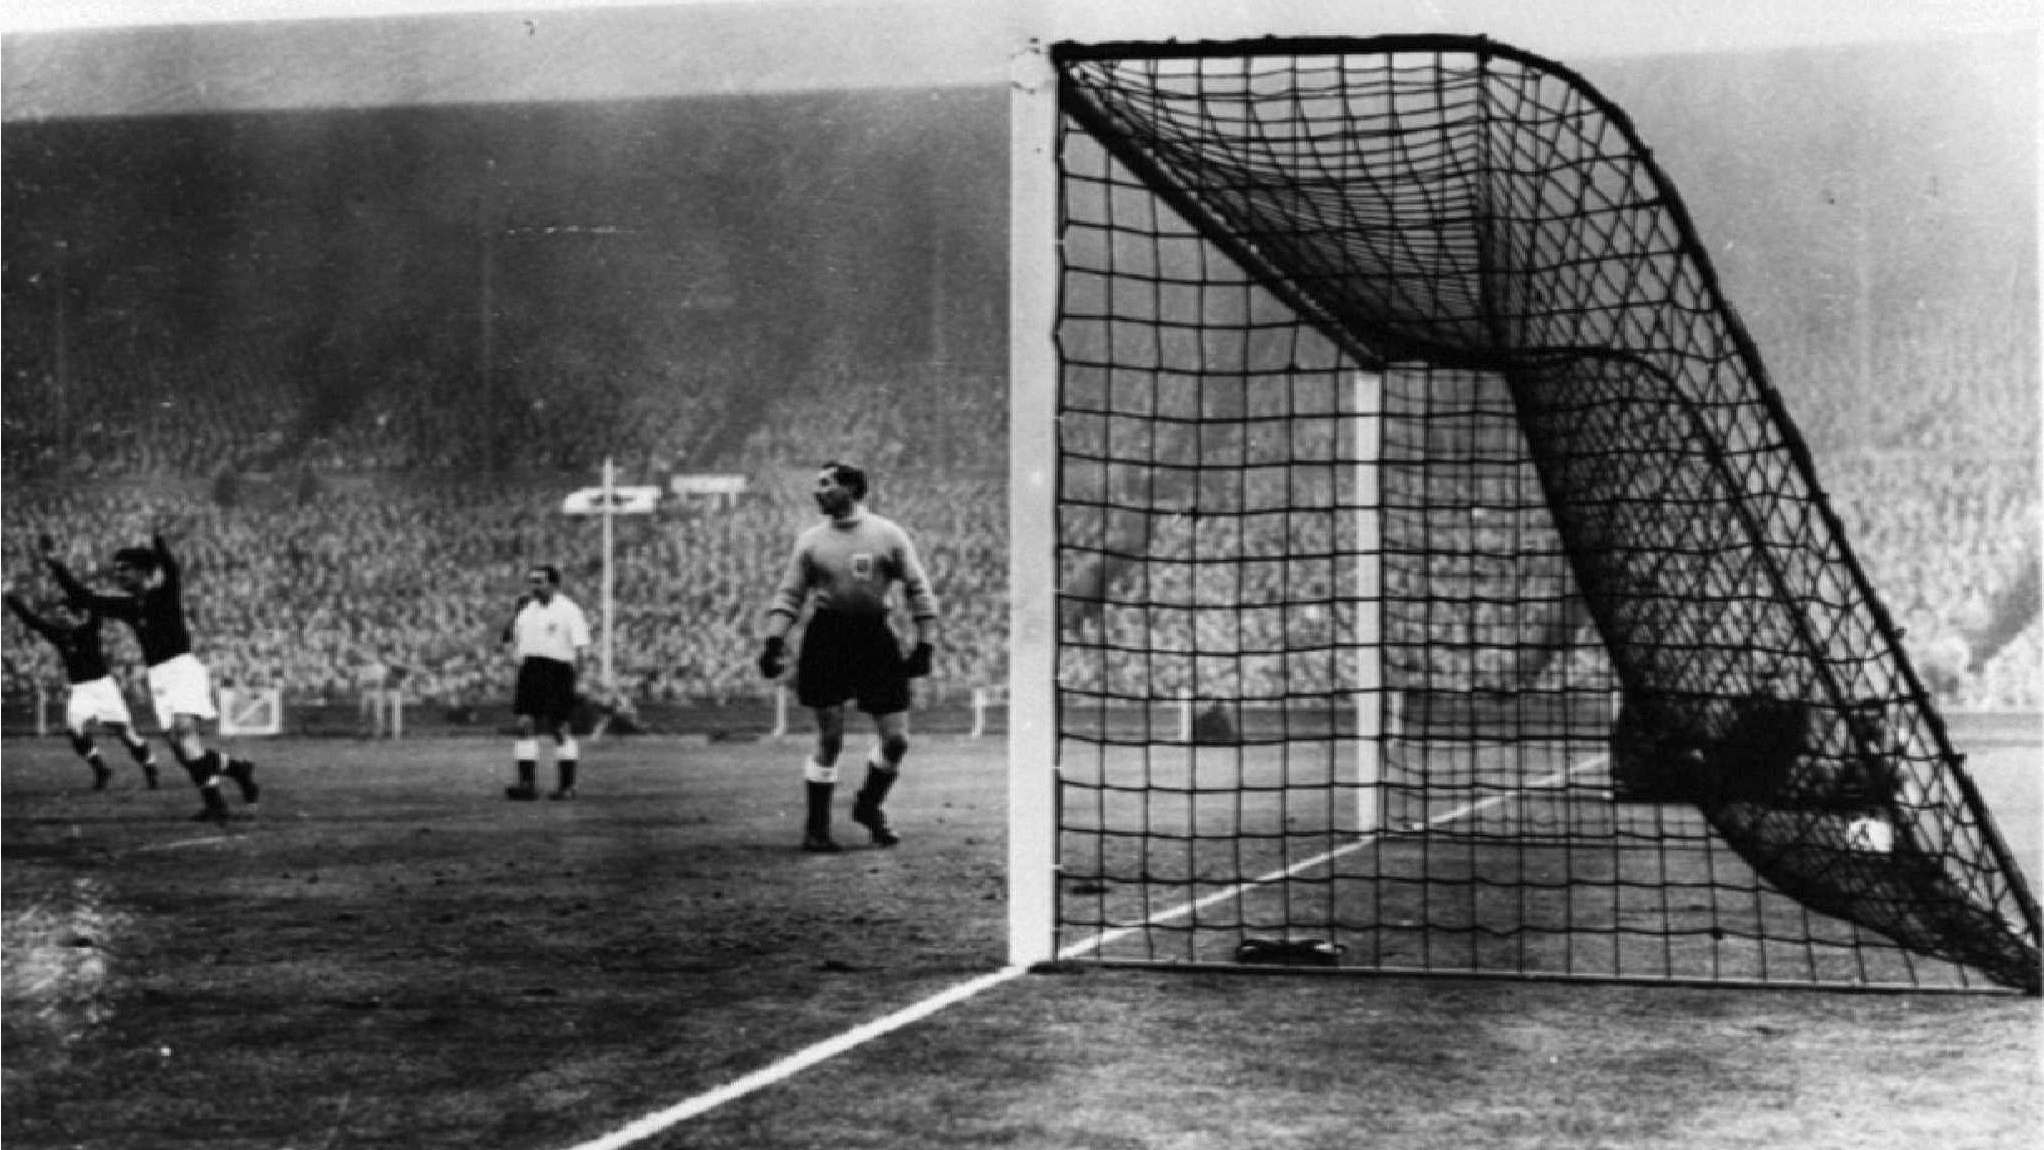 England v Hungary 3:6 1953